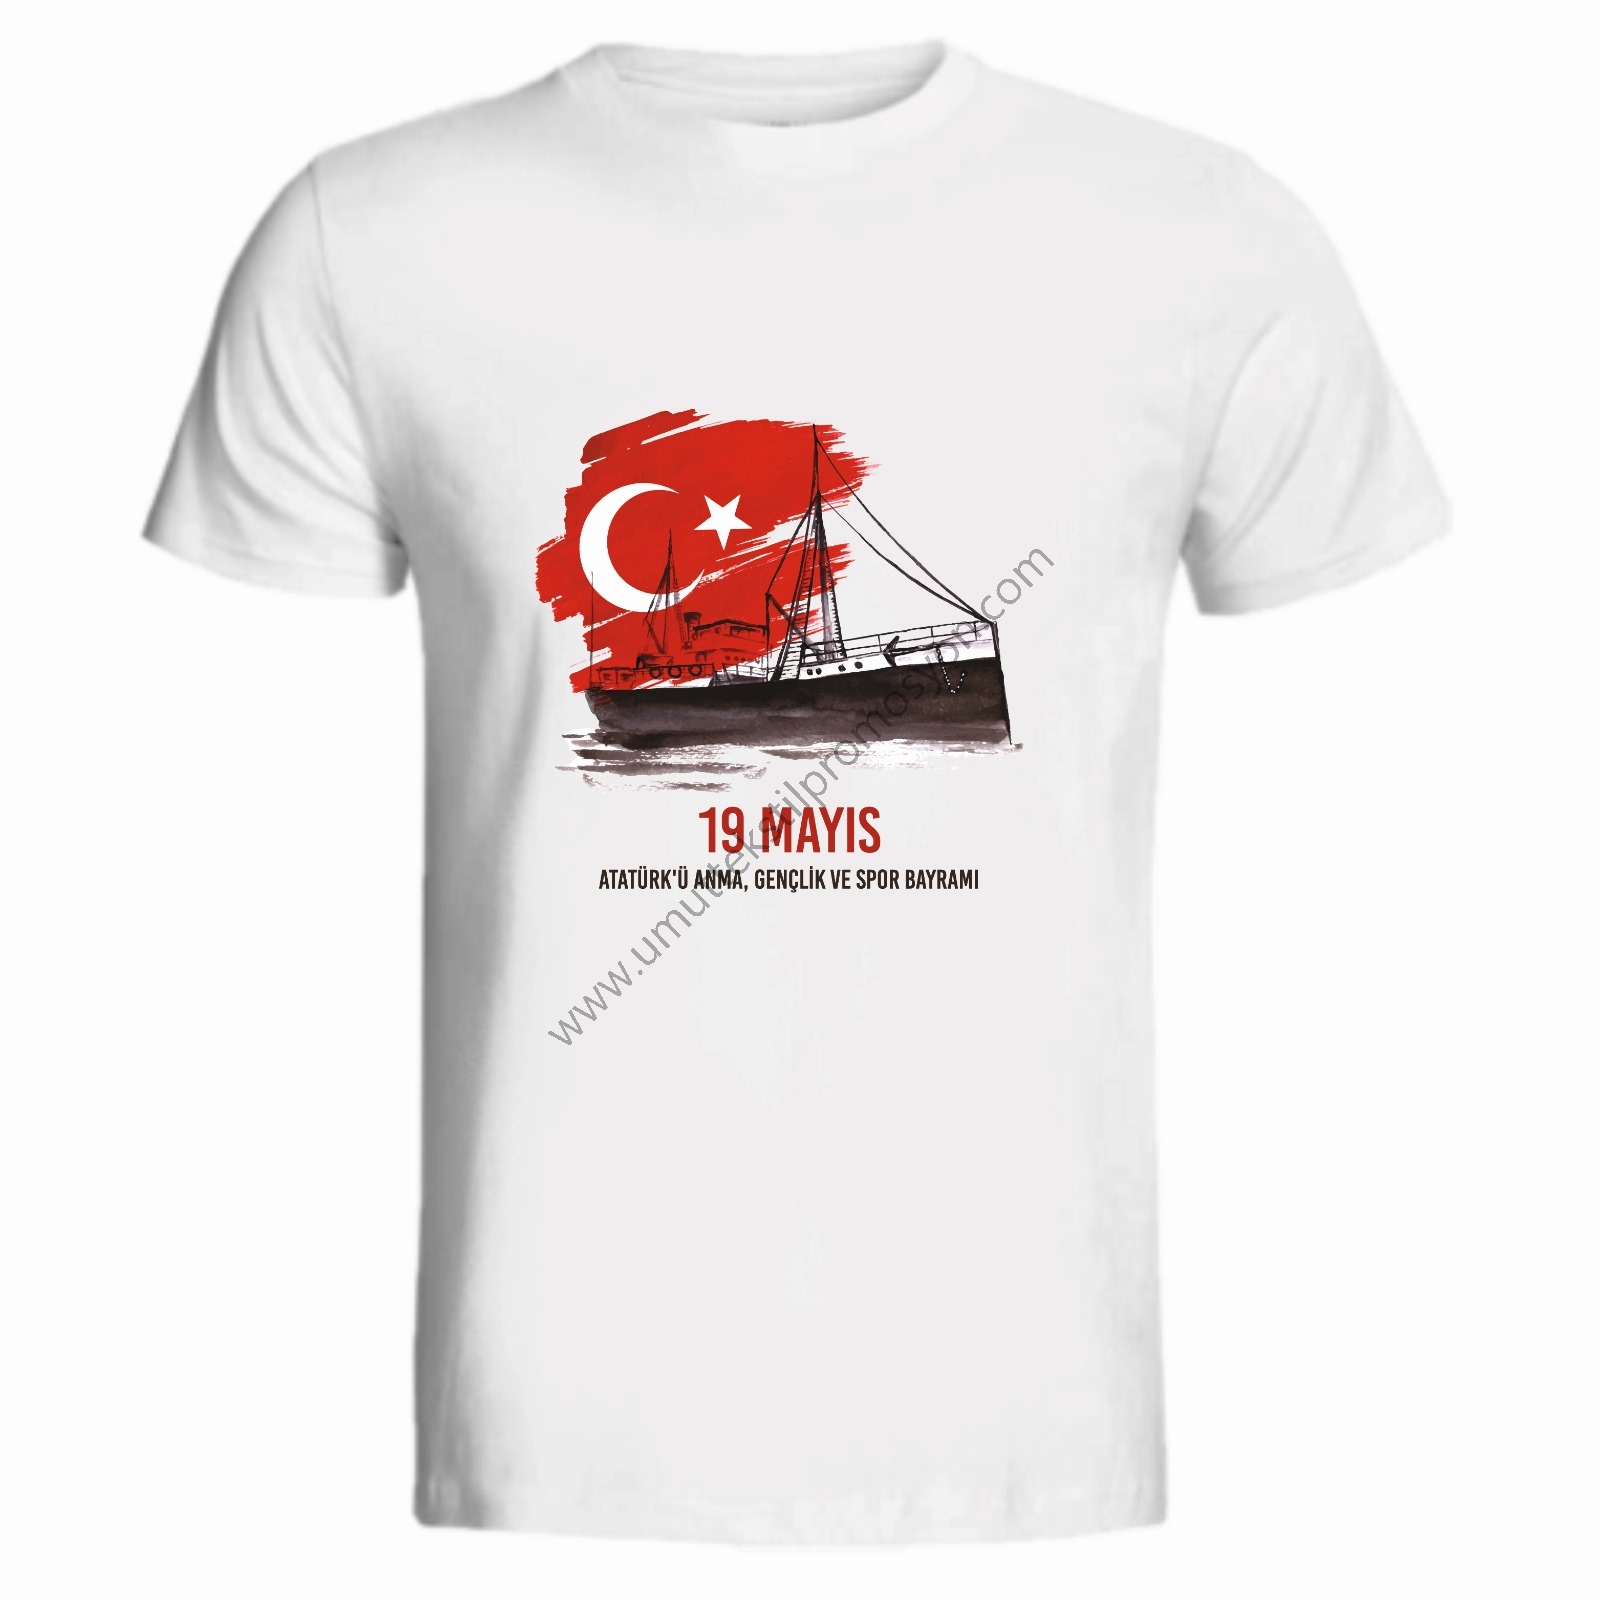 19 Mayıs Baskılı Tişört Ankara